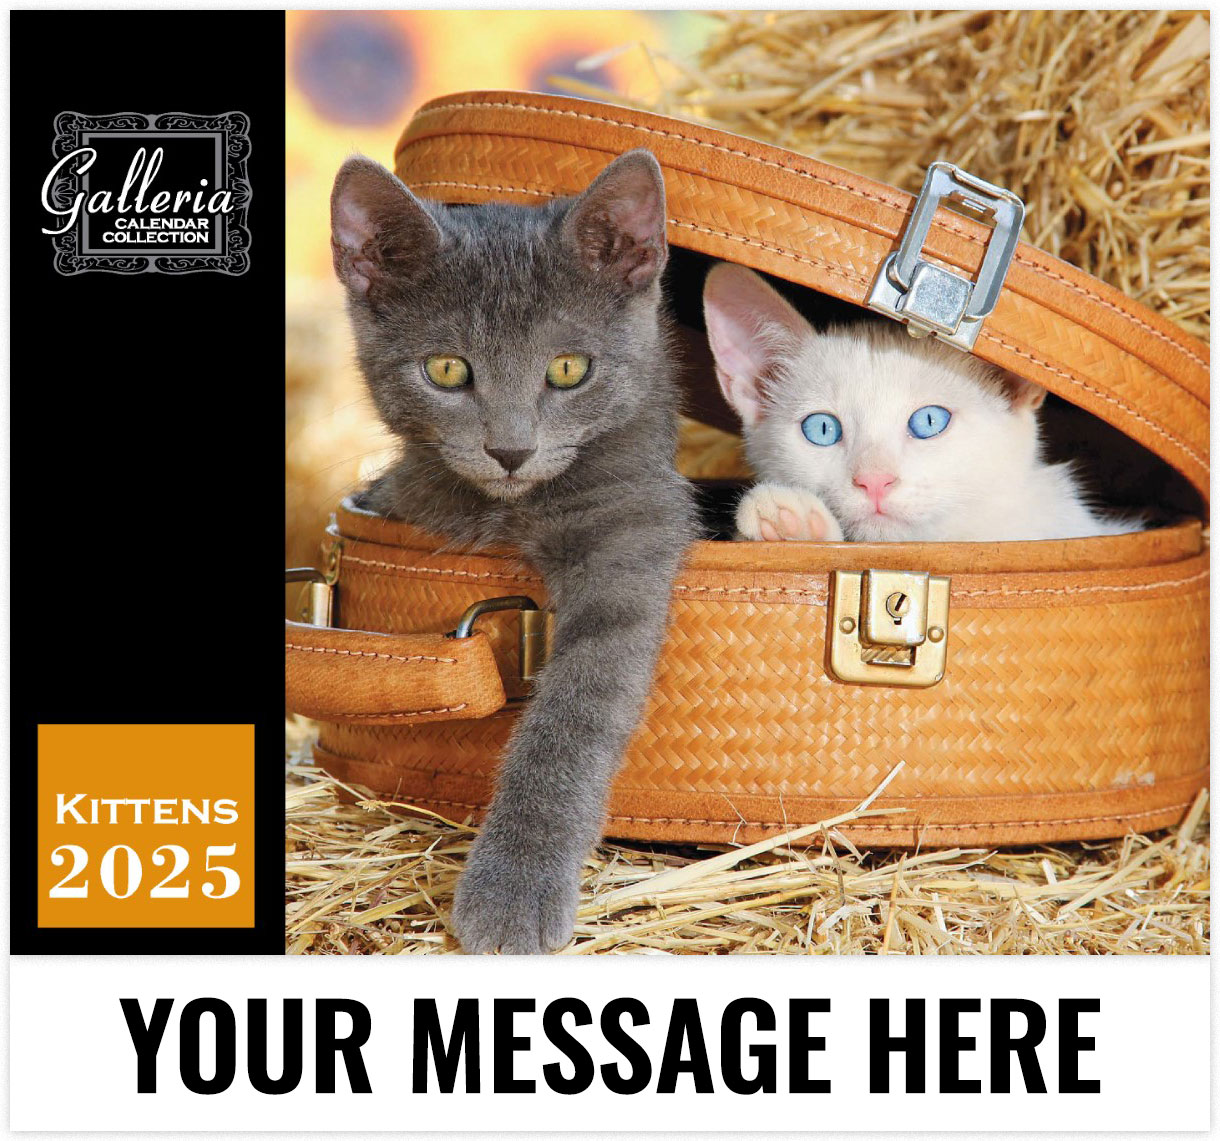 Galleria Kittens - 2025